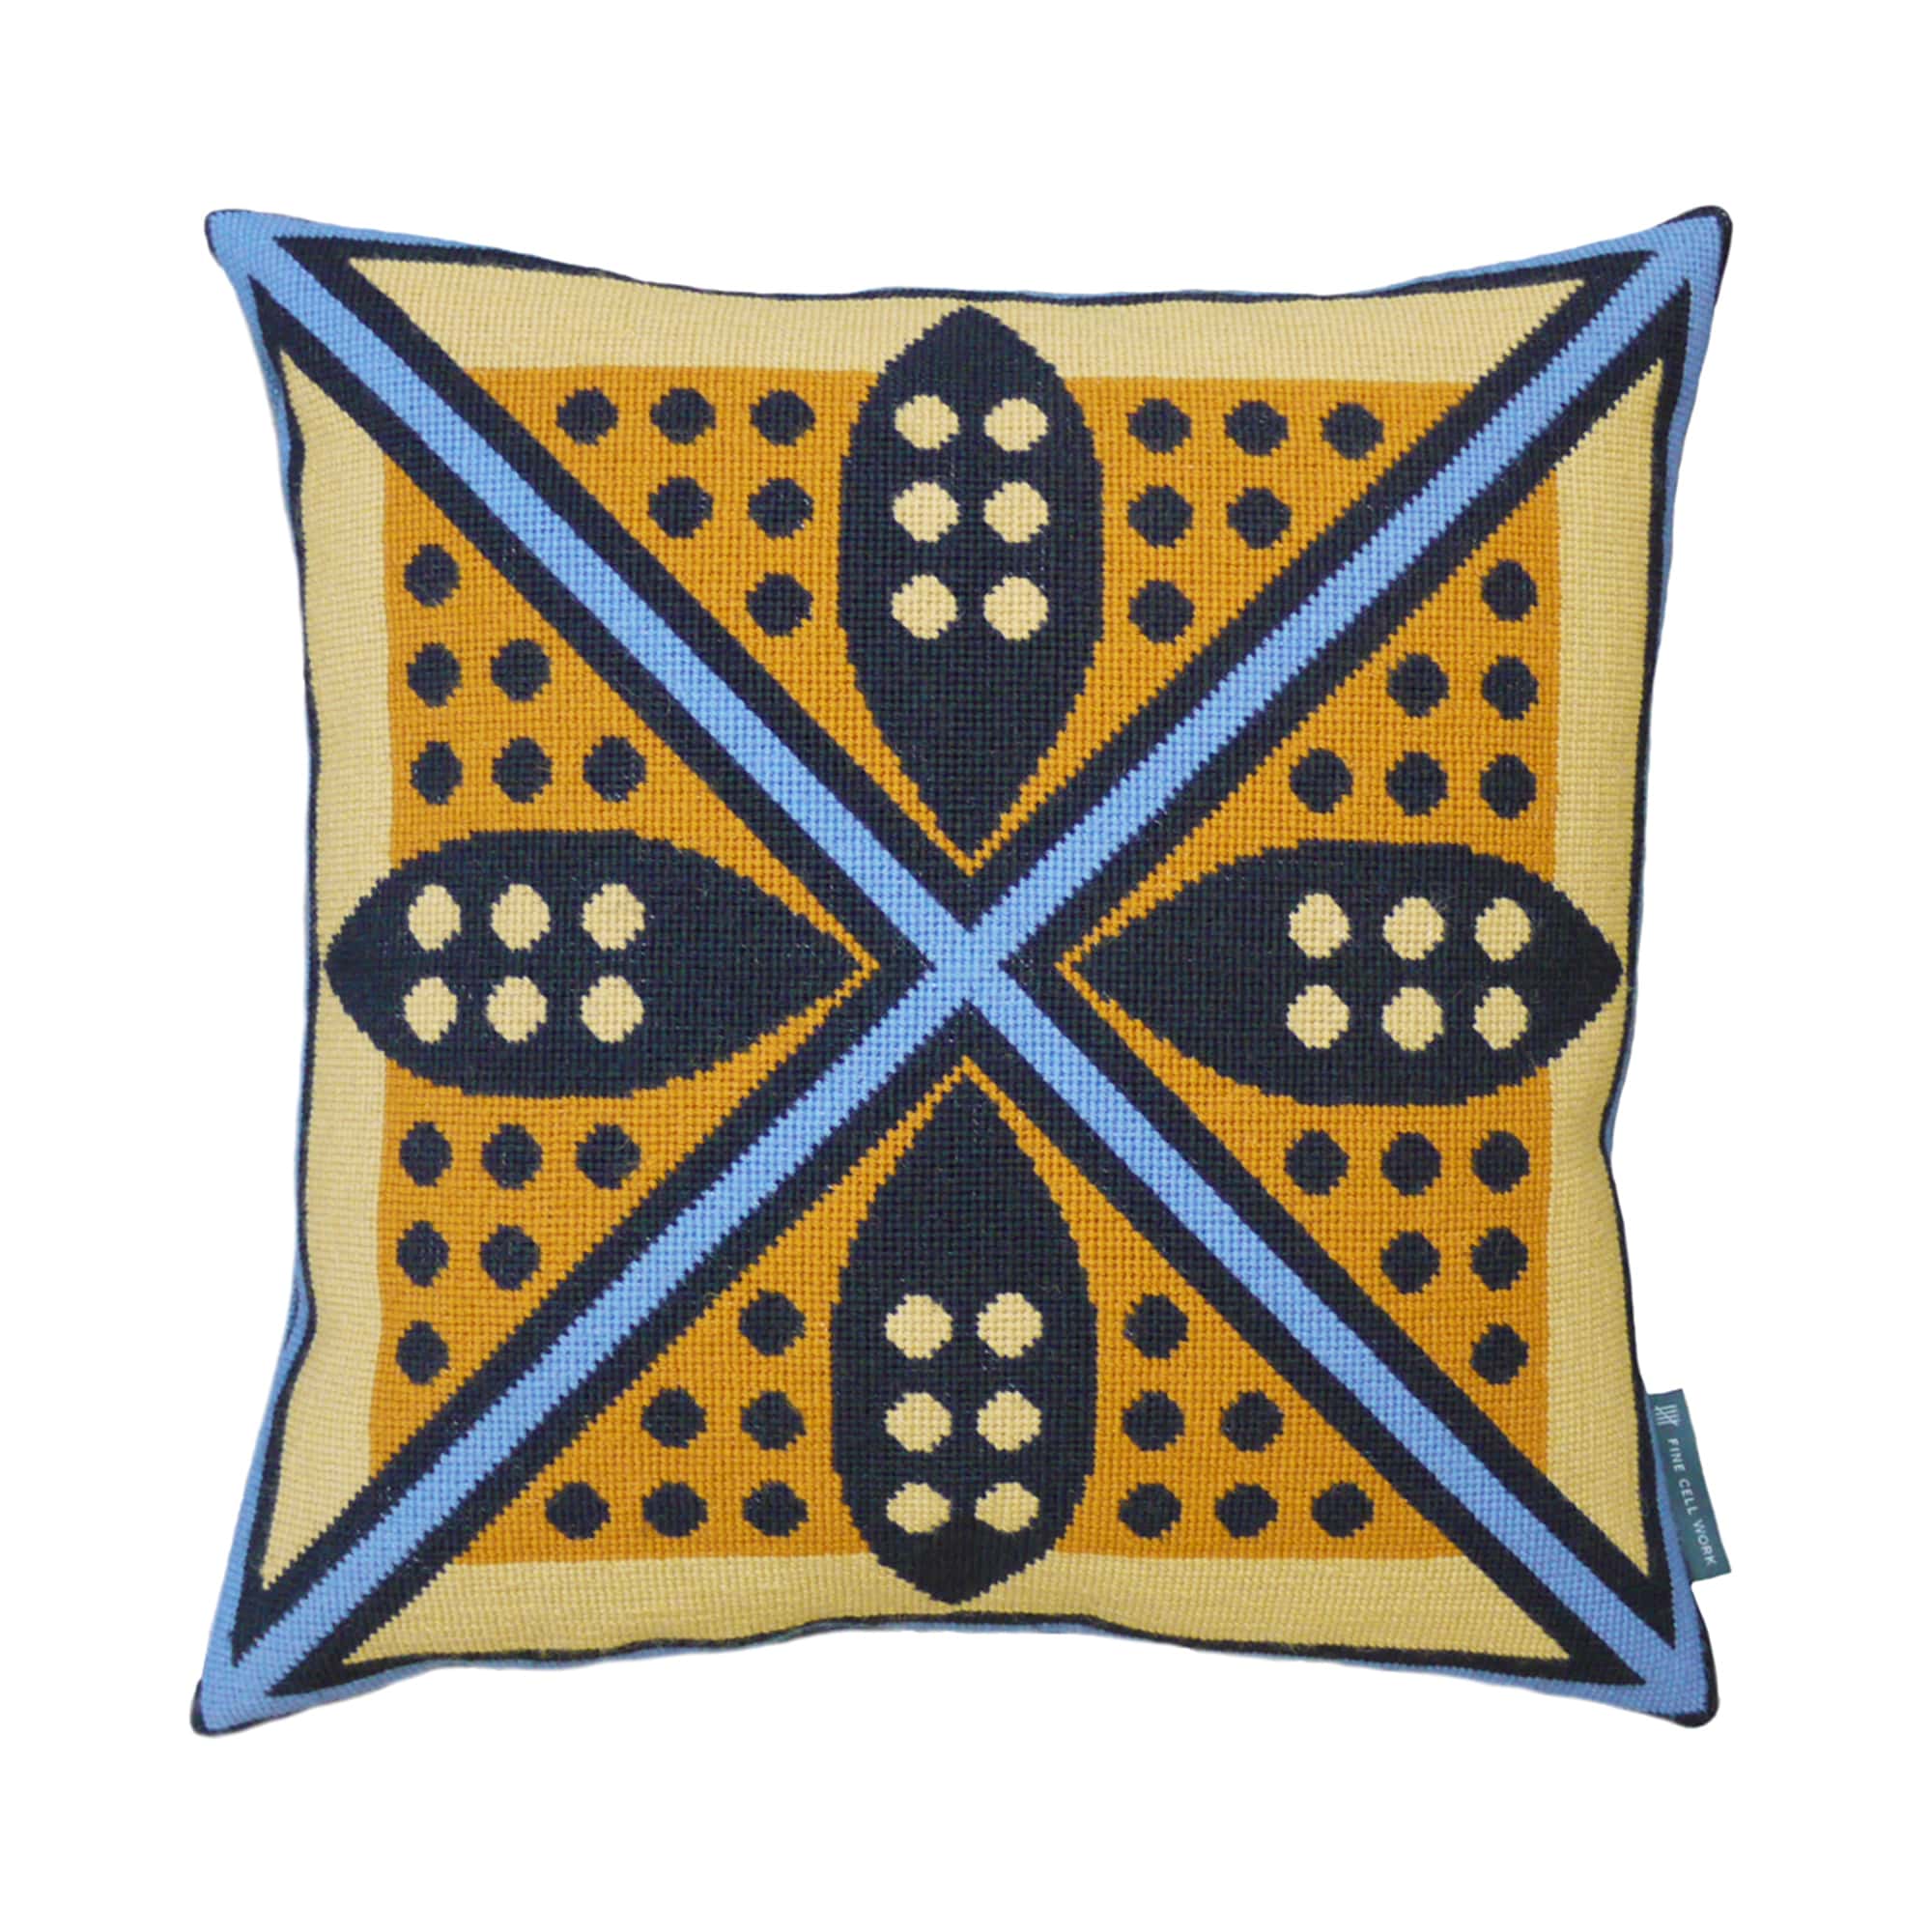 Fine Cell Work Cressida Bell Shield Wool Hand Stitched Cushion Blue Orange Yellow Black Handmade in Prison